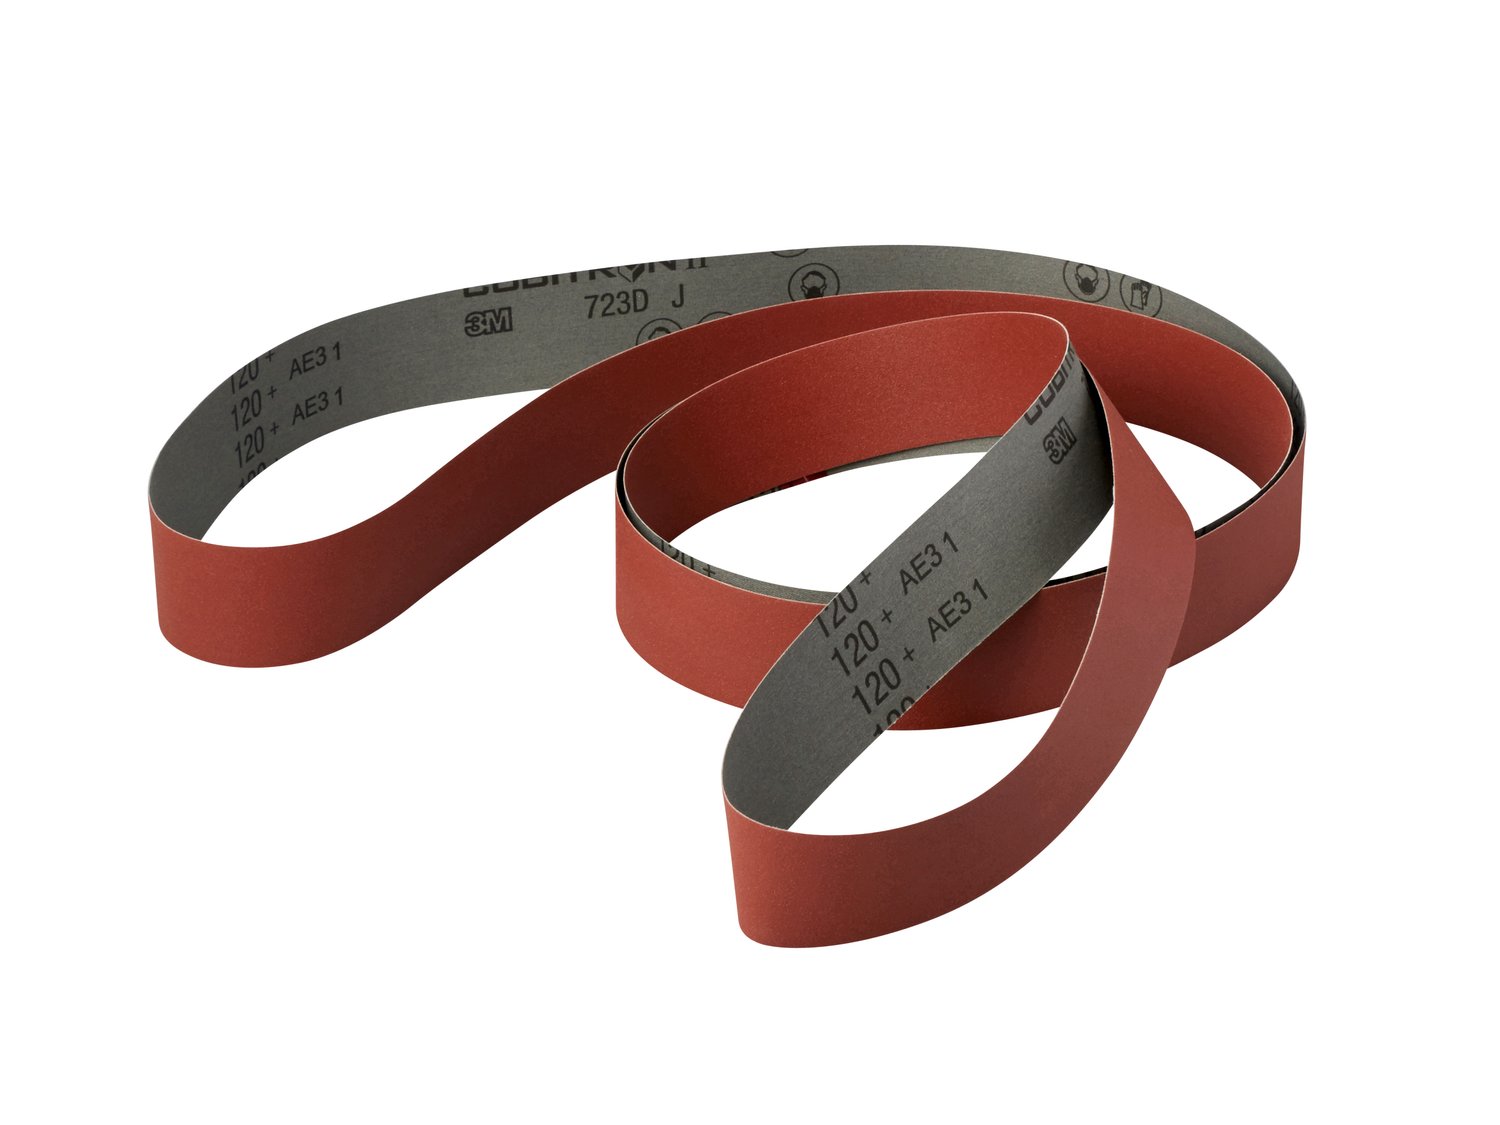 7010512727 - 3M Cubitron ll Cloth Belt 723D, 100+ J-weight, 1/2 in x 42 in,
Film-lok, Full-flex